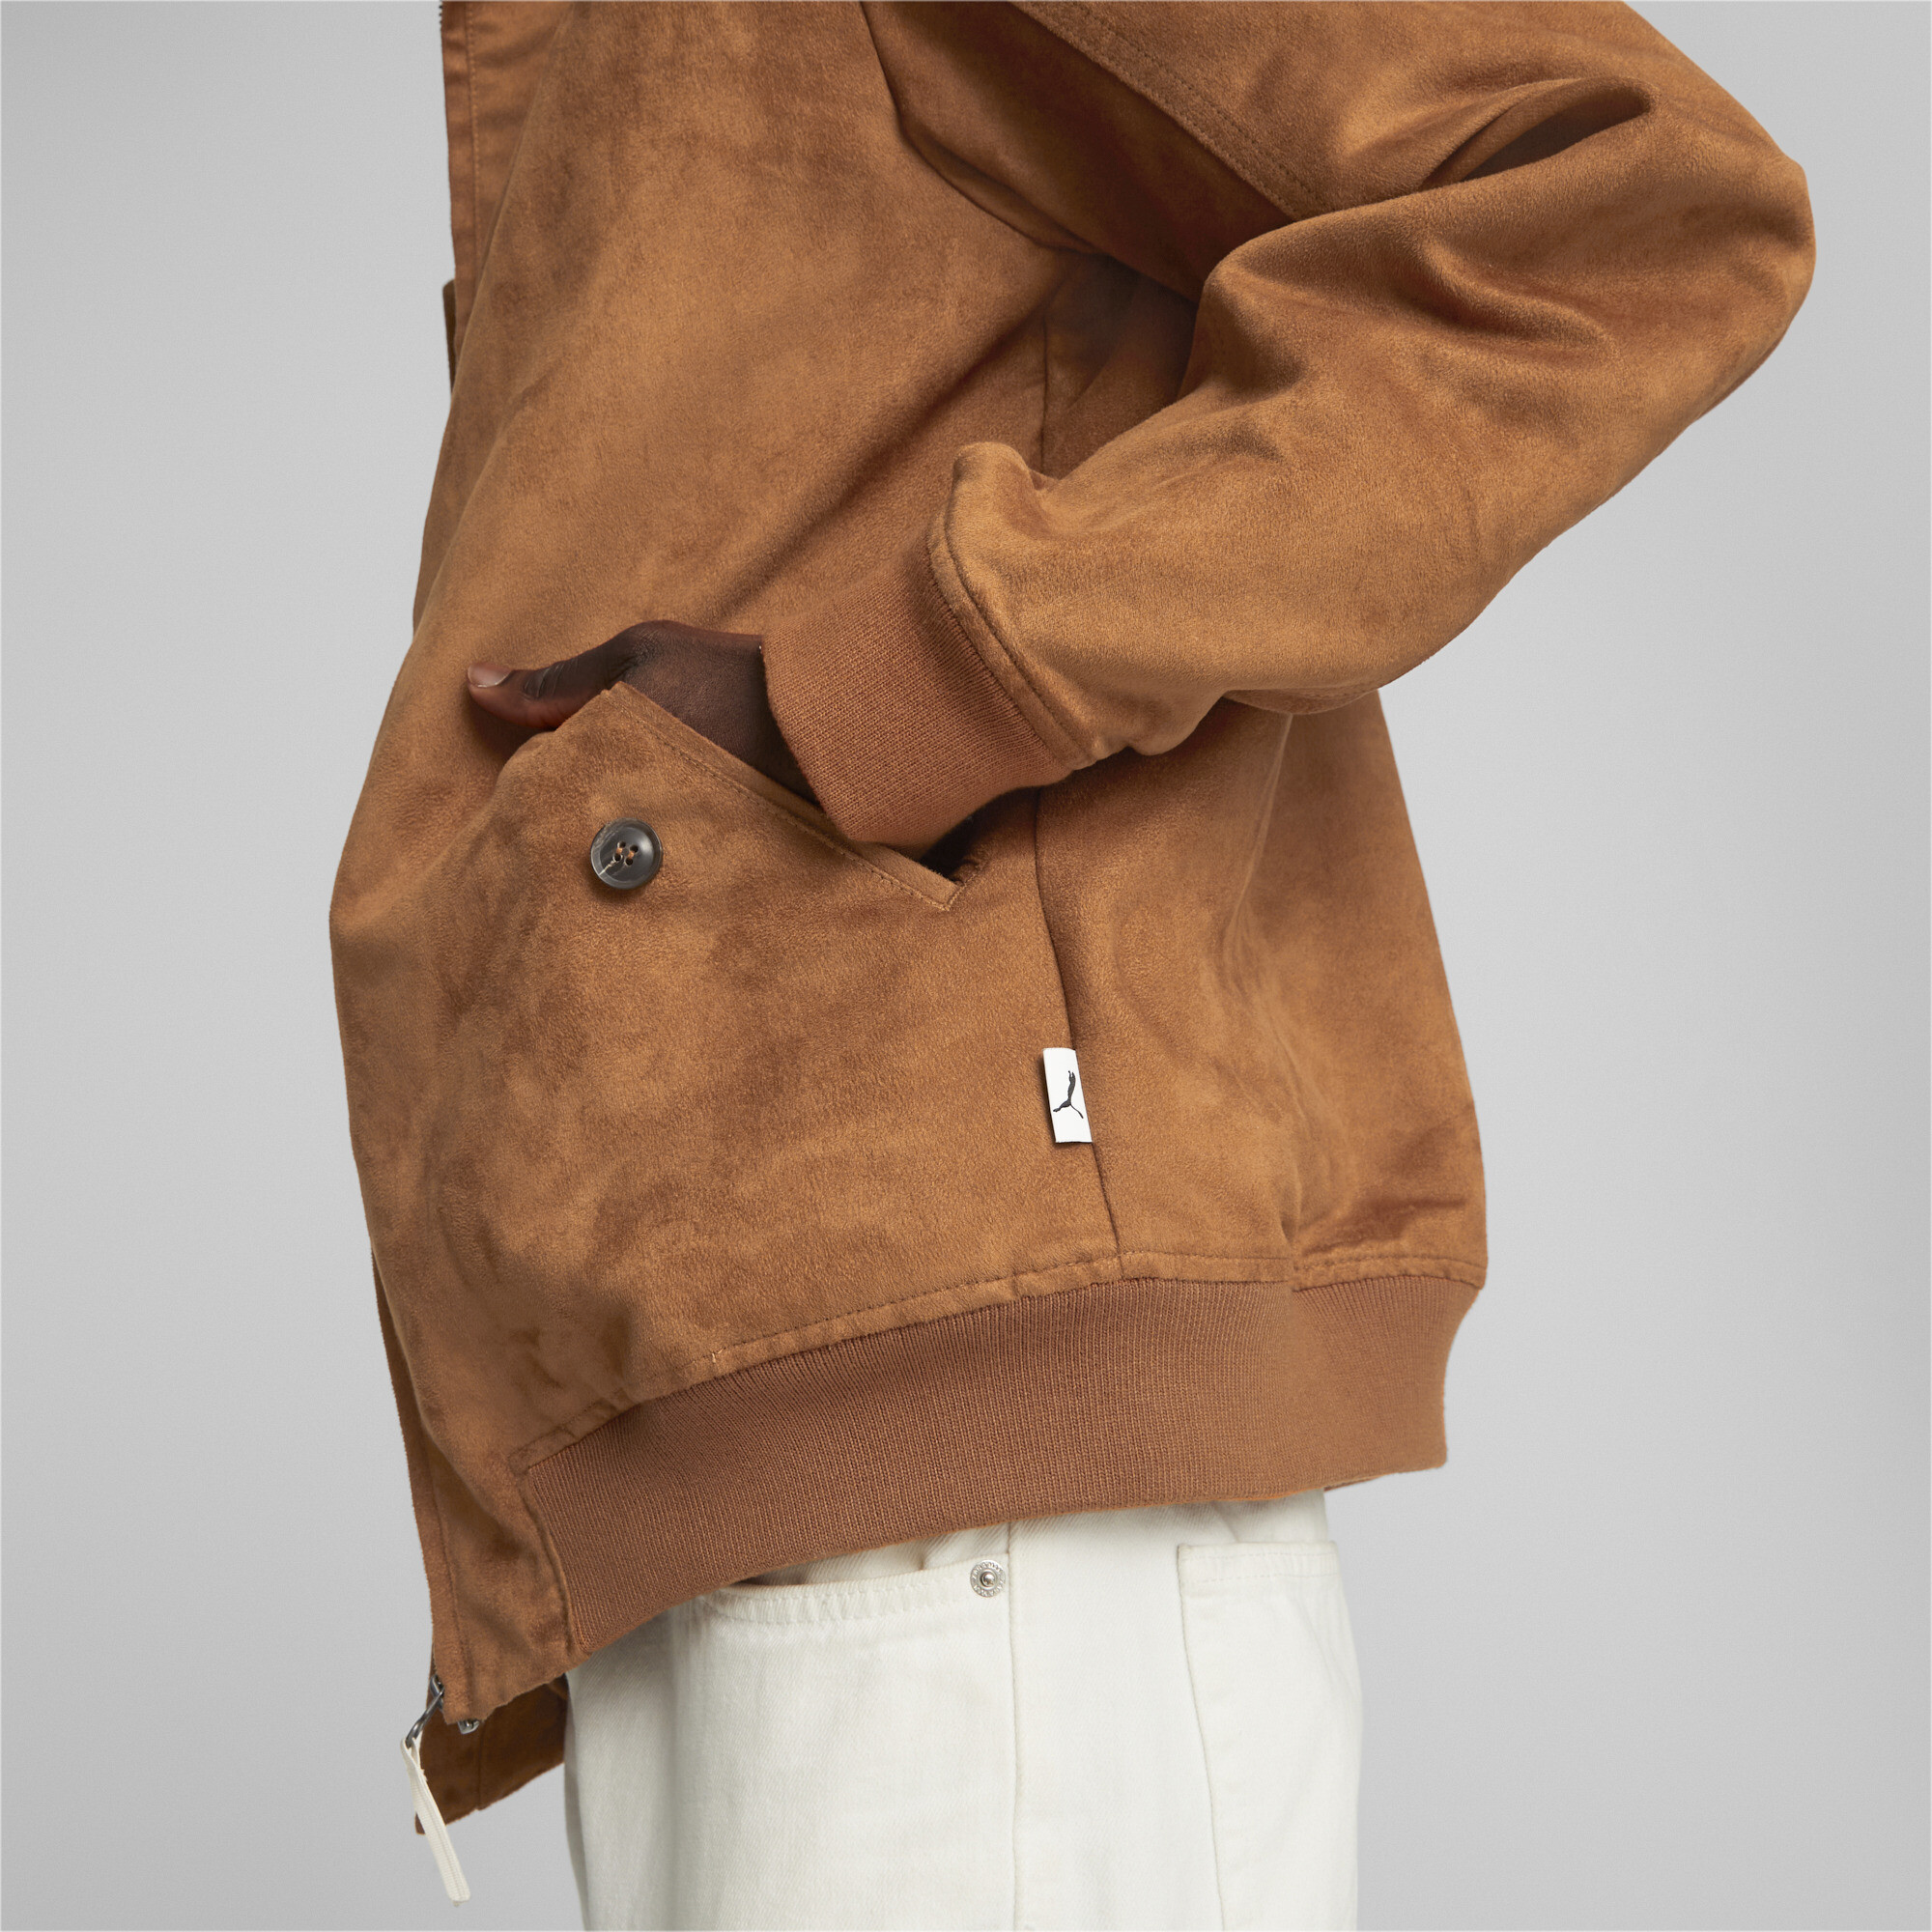 Men's PUMA MMQ Harrington Jacket In Brown, Size Large